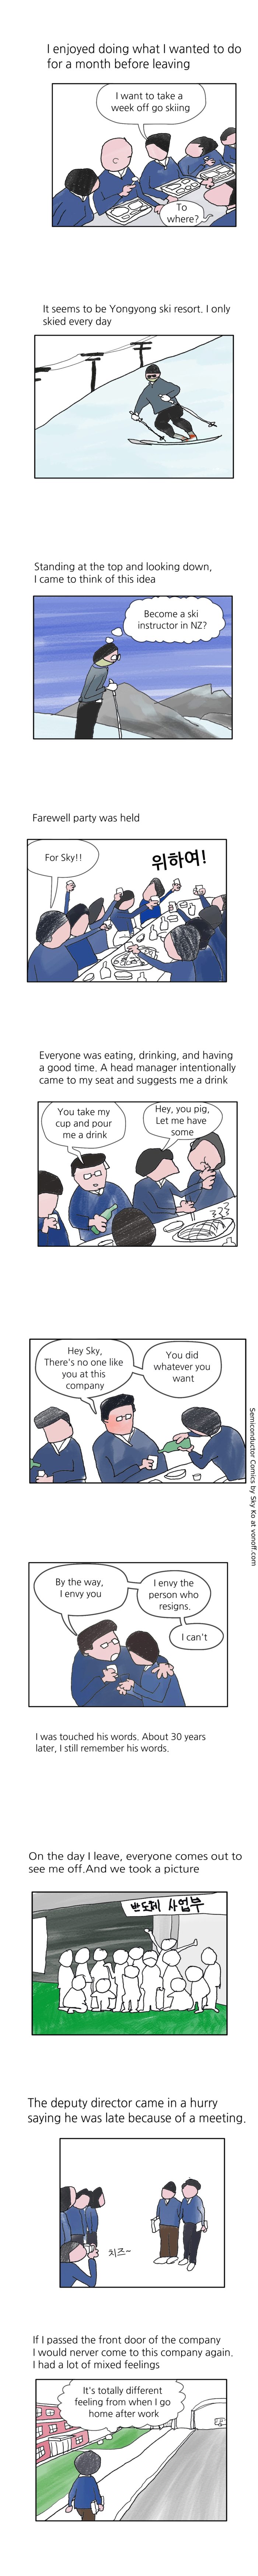 skyonsky Episode 4 -p3- skyko comics about life story